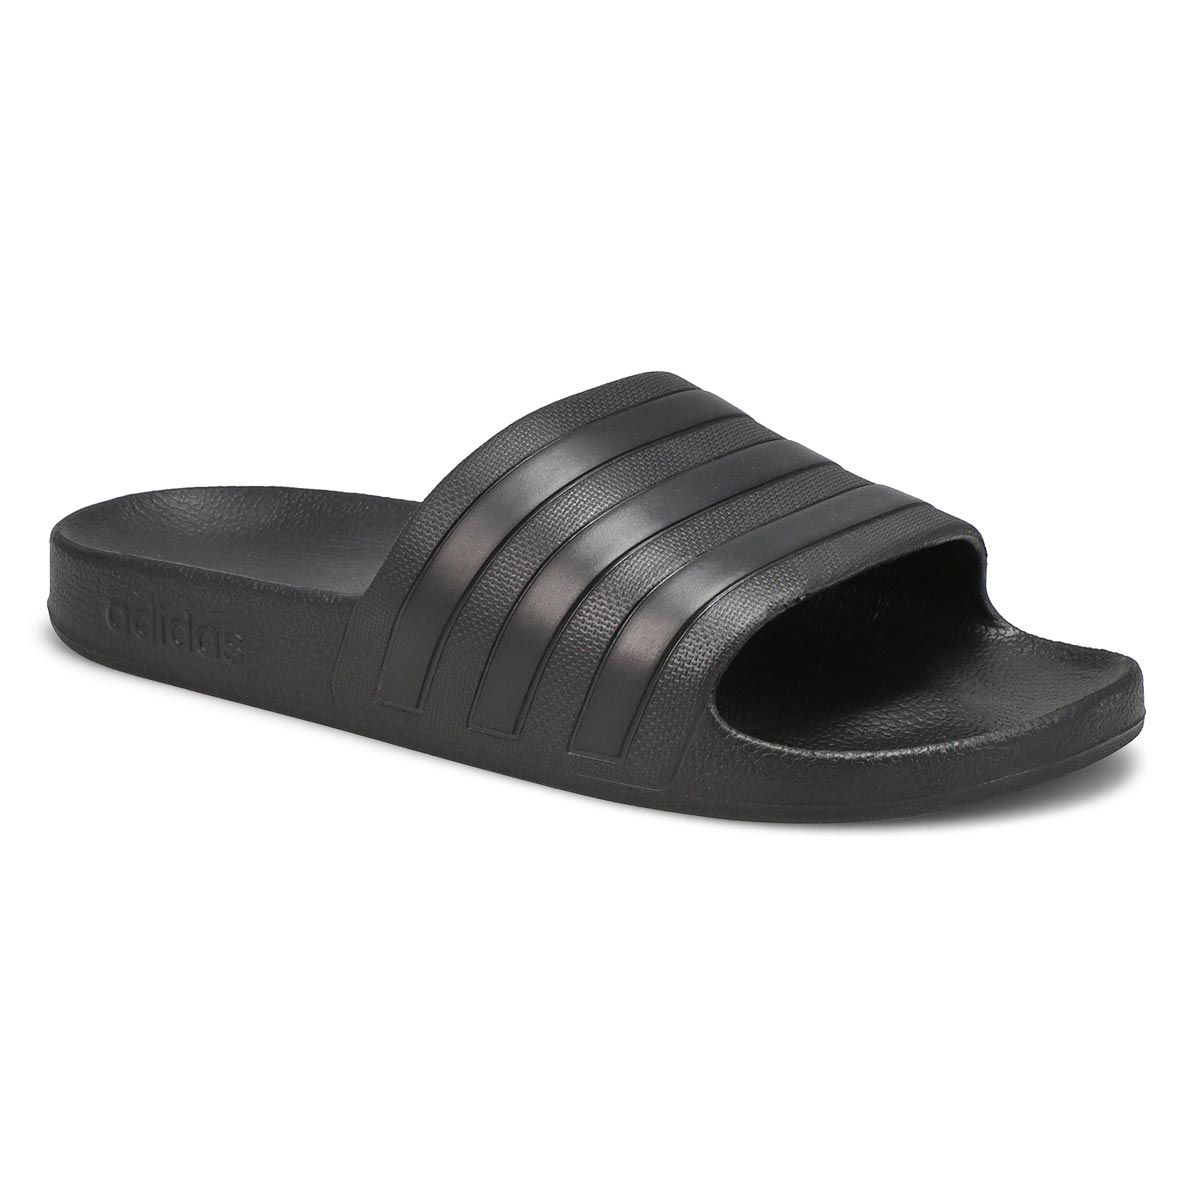 adidas Women's Comfort Flip Flop Sandal